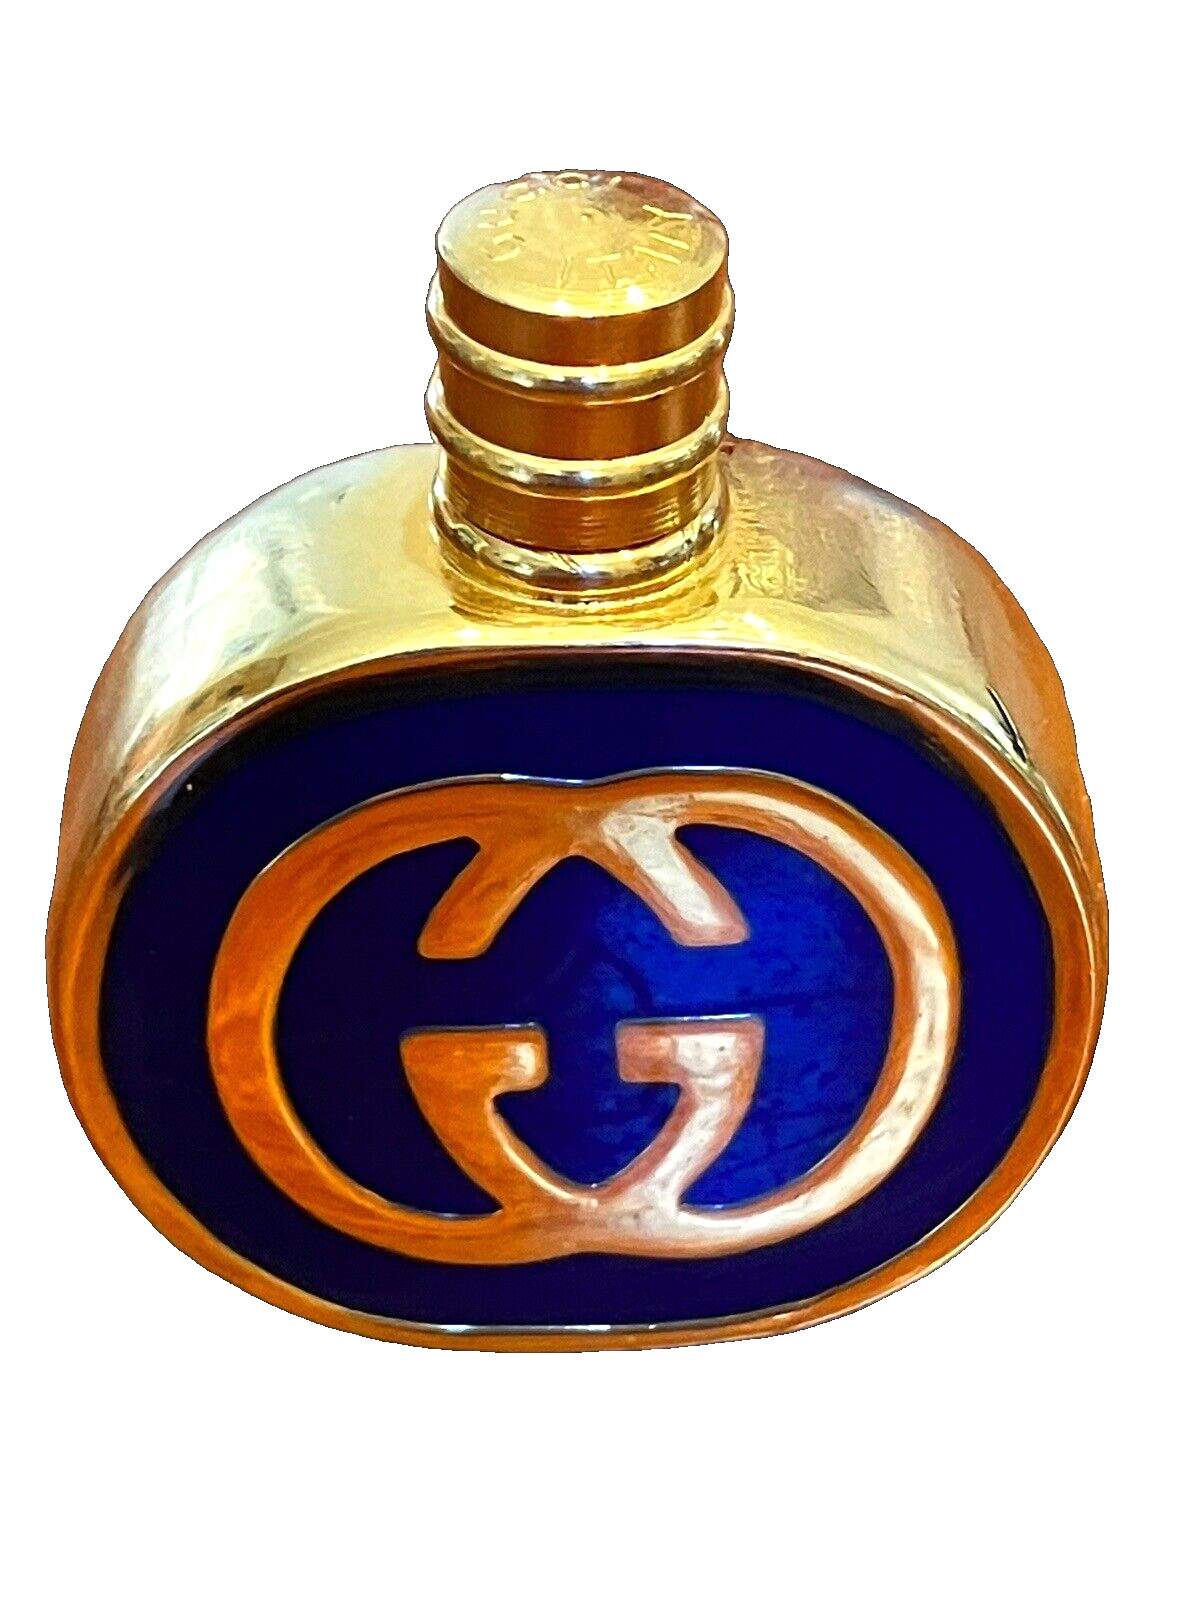 Gucci Cobalt Enamel Perfume Vanity Bottle Accessory GG Vintage Italy Designer